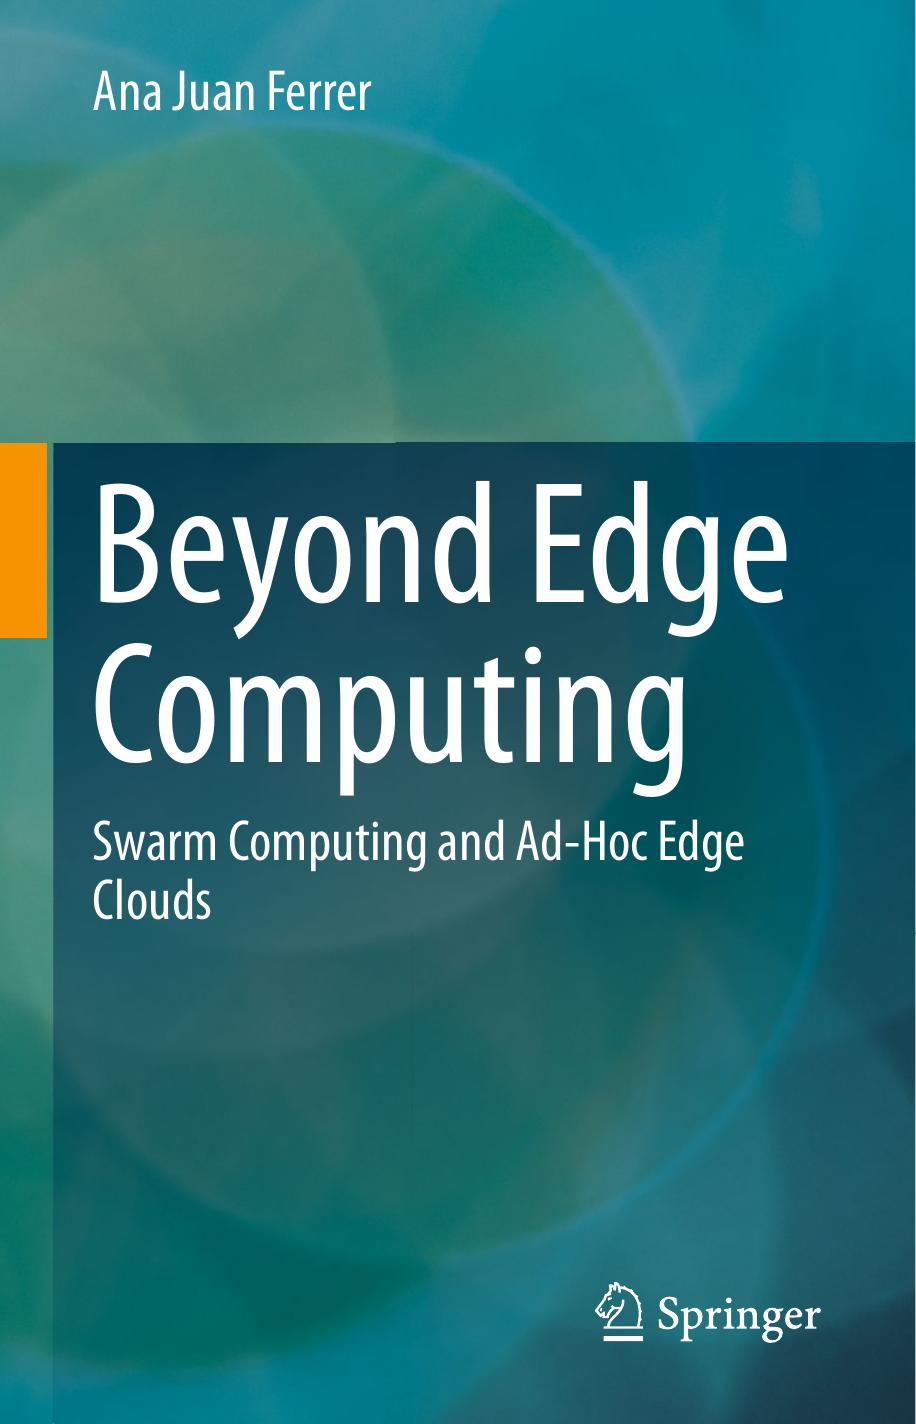 Beyond Edge Computing: Swarm Computing and Ad-Hoc Edge Clouds